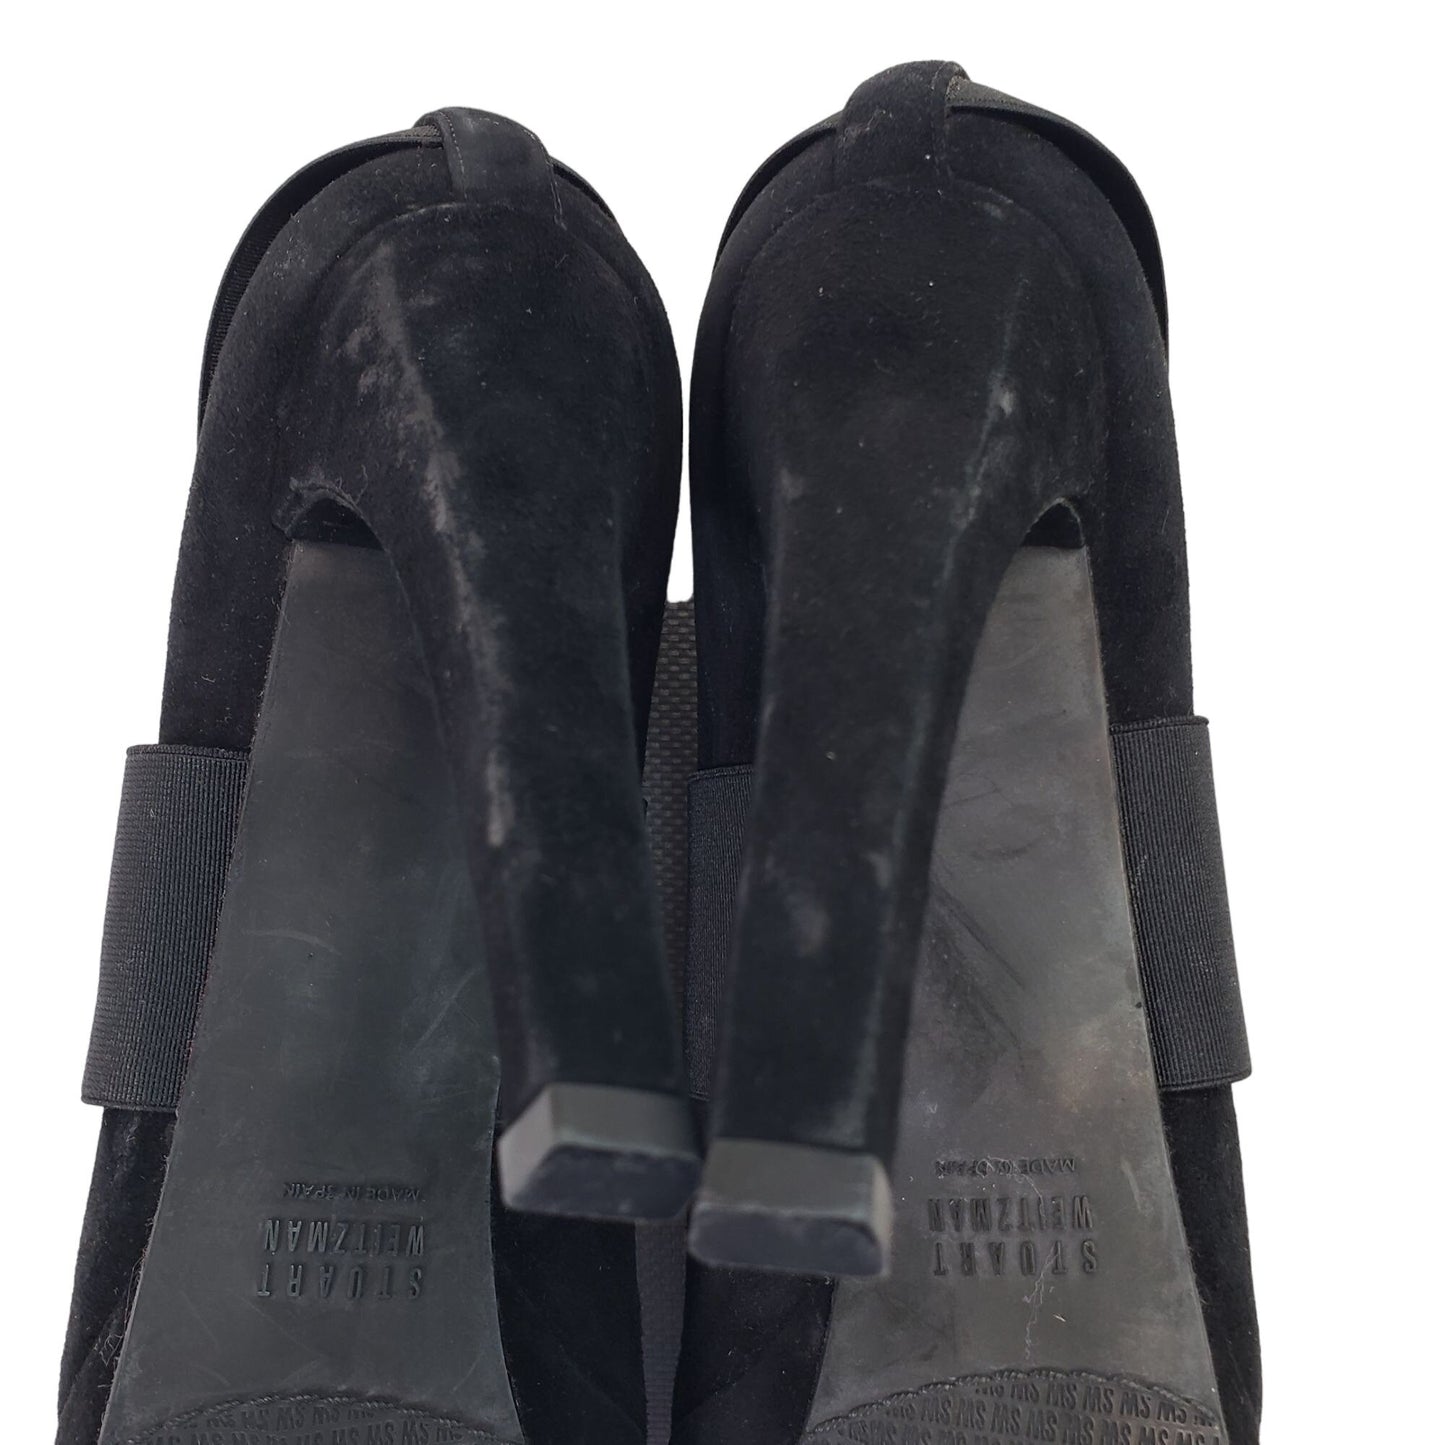 Stuart Weitzman Suede Leather Platform Heels Size 10 (est)